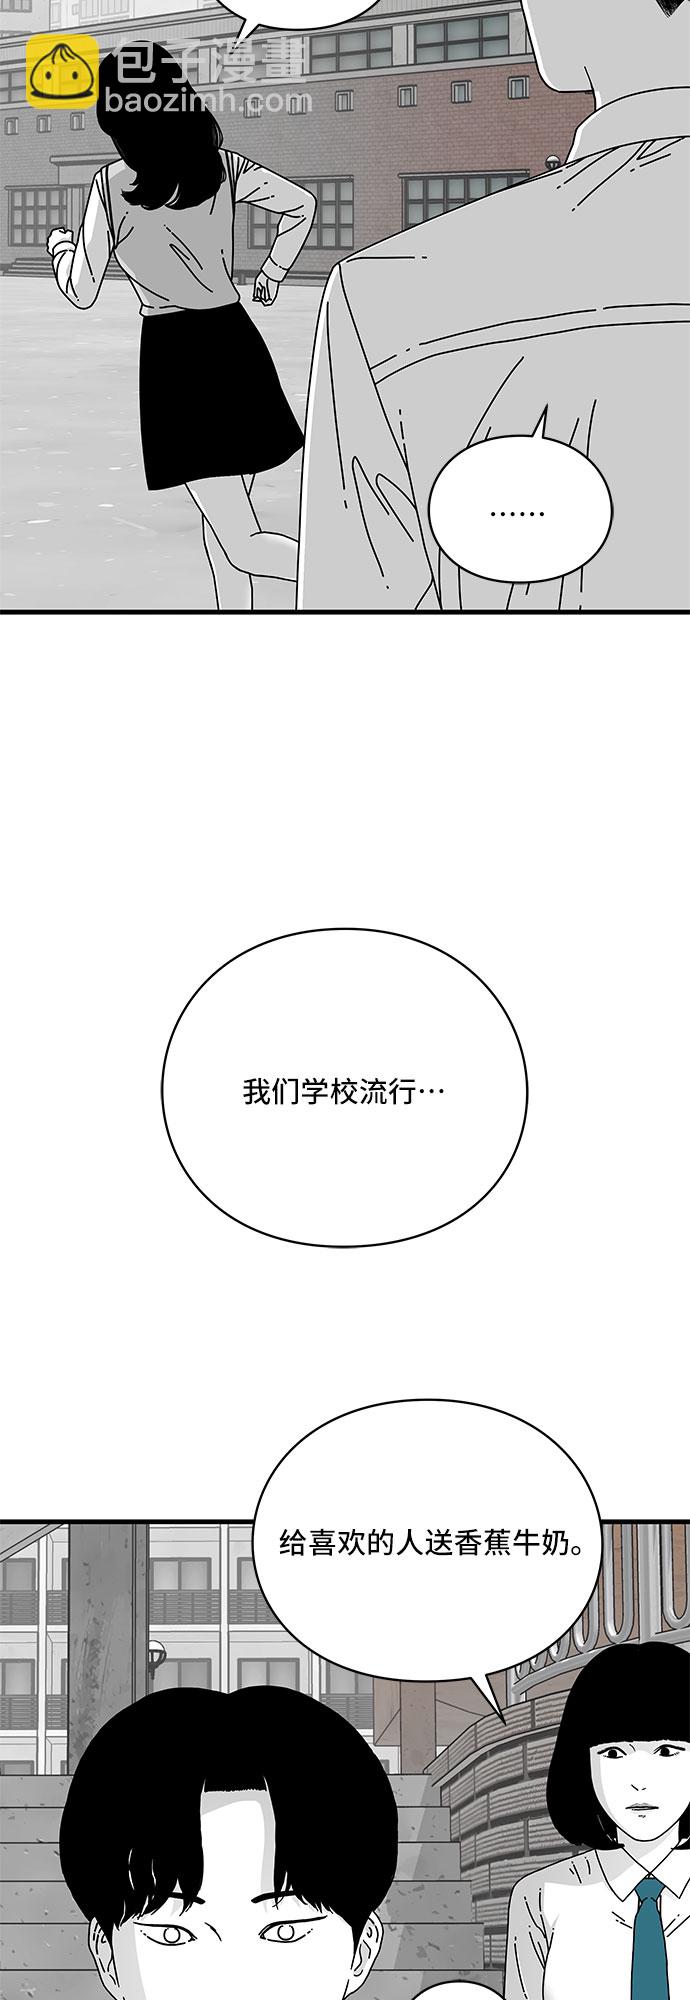 EYES - 第11話(2/2) - 4